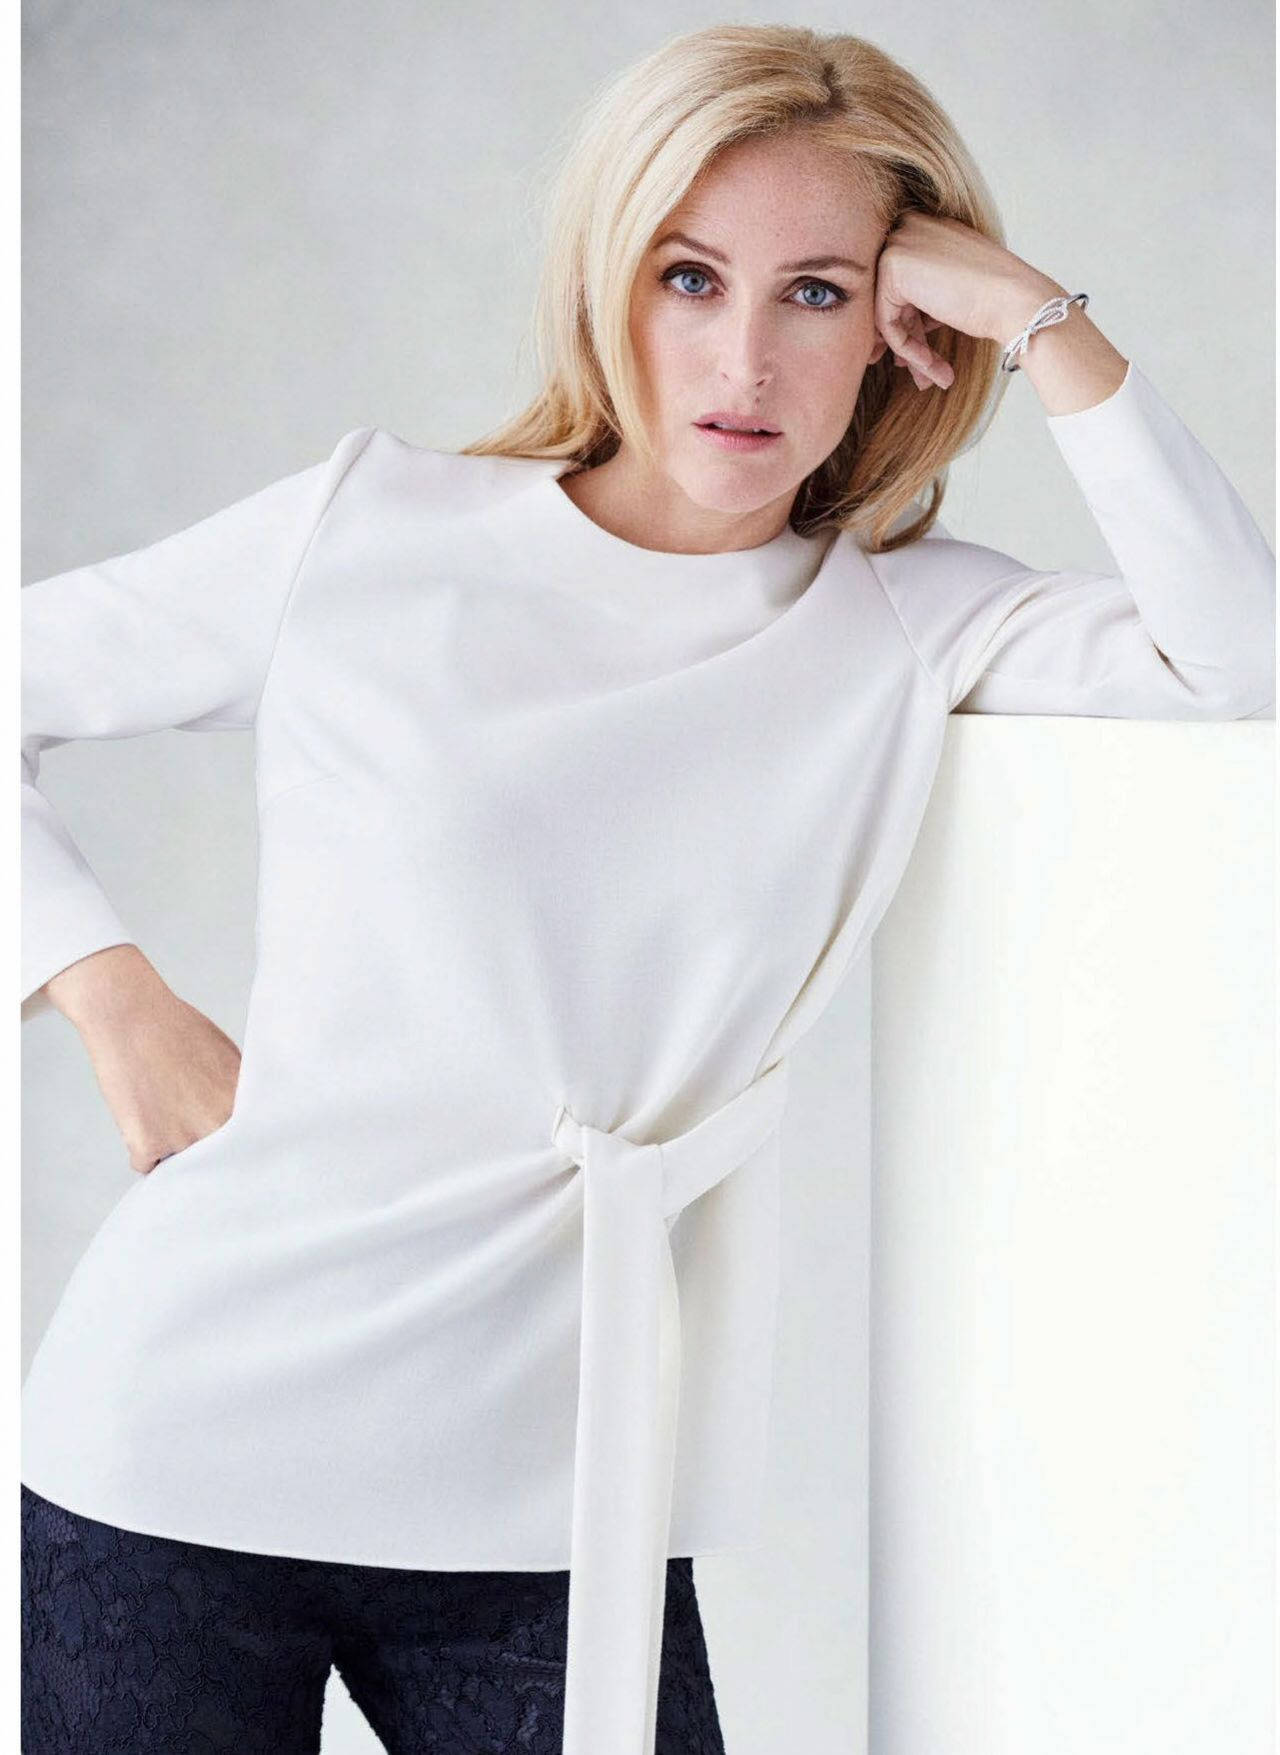 Elegant Gillian Anderson In Harper's Bazaar Magazine